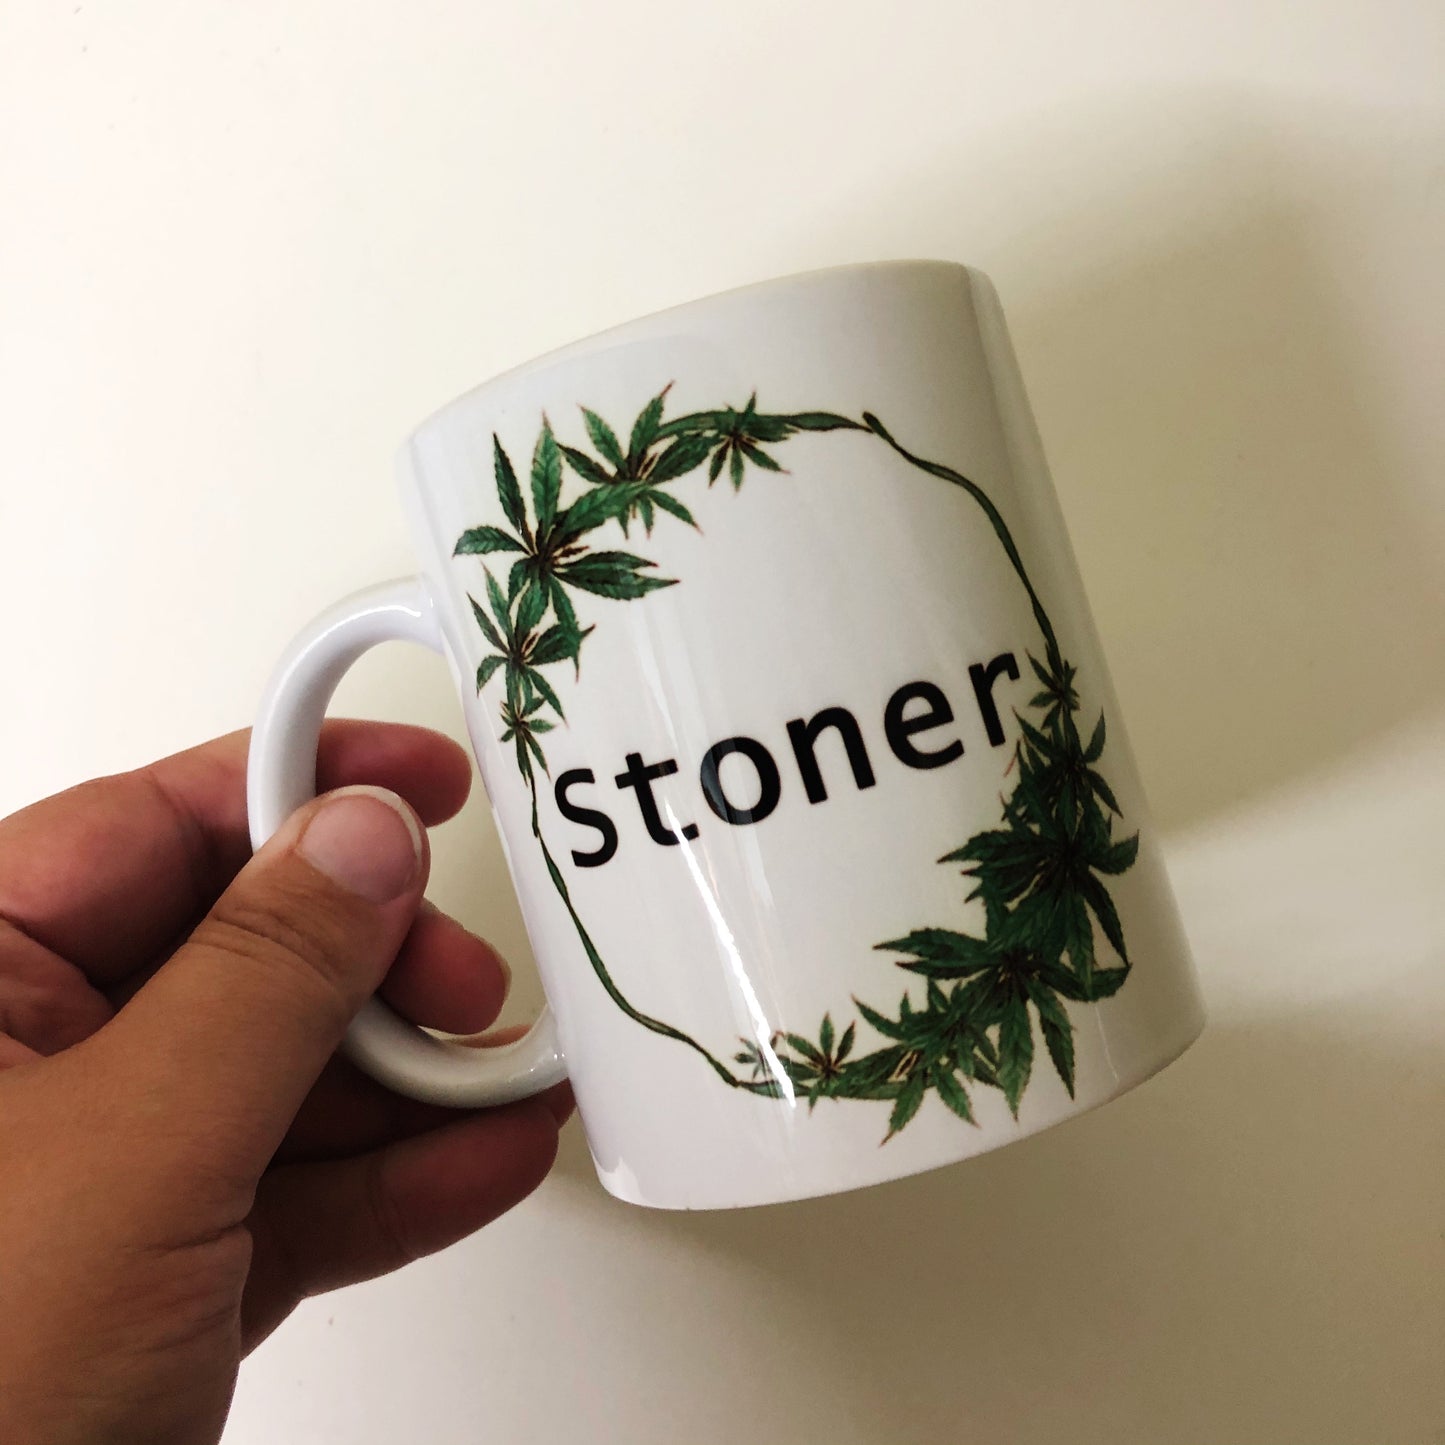 Stoner mug